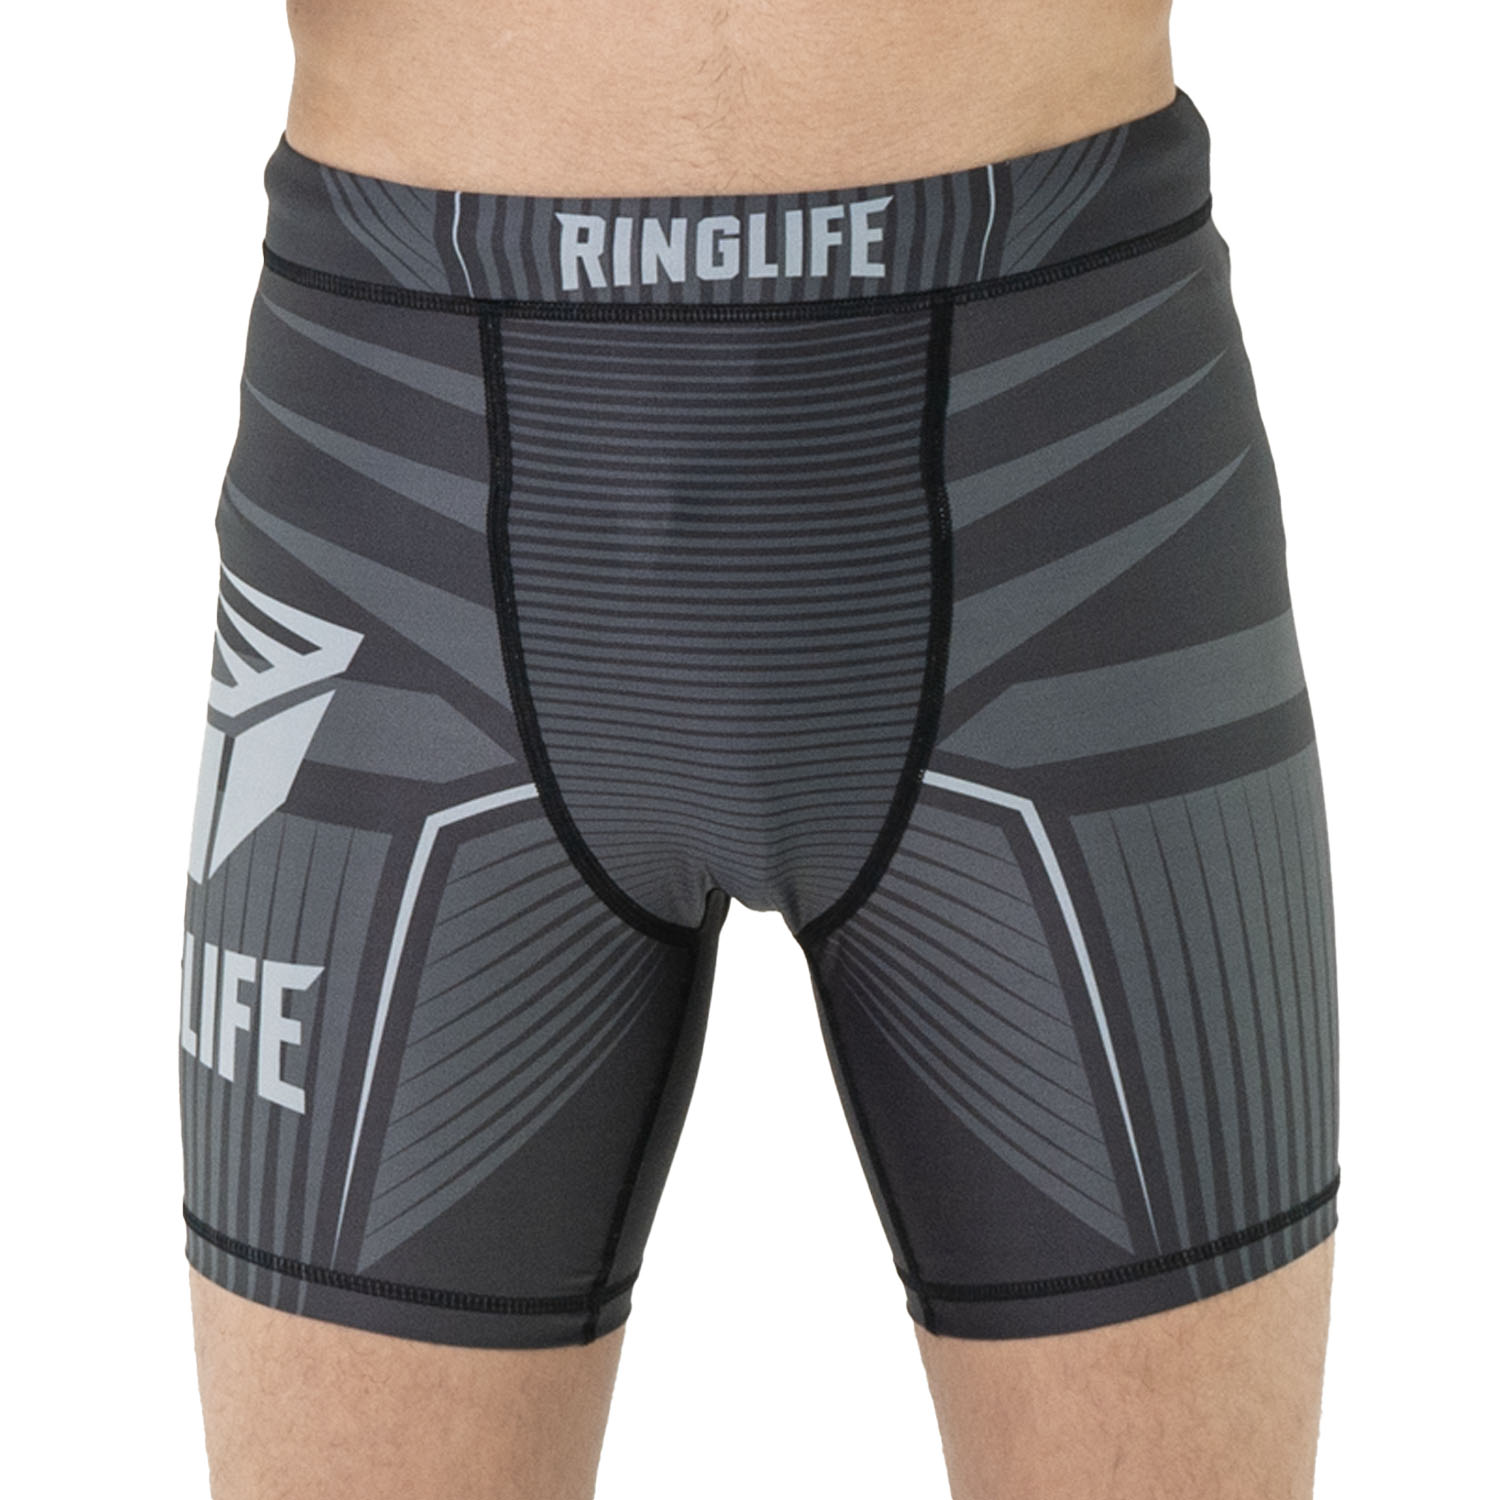 RINGLIFE Compression Shorts - Octaring schwarz-grau